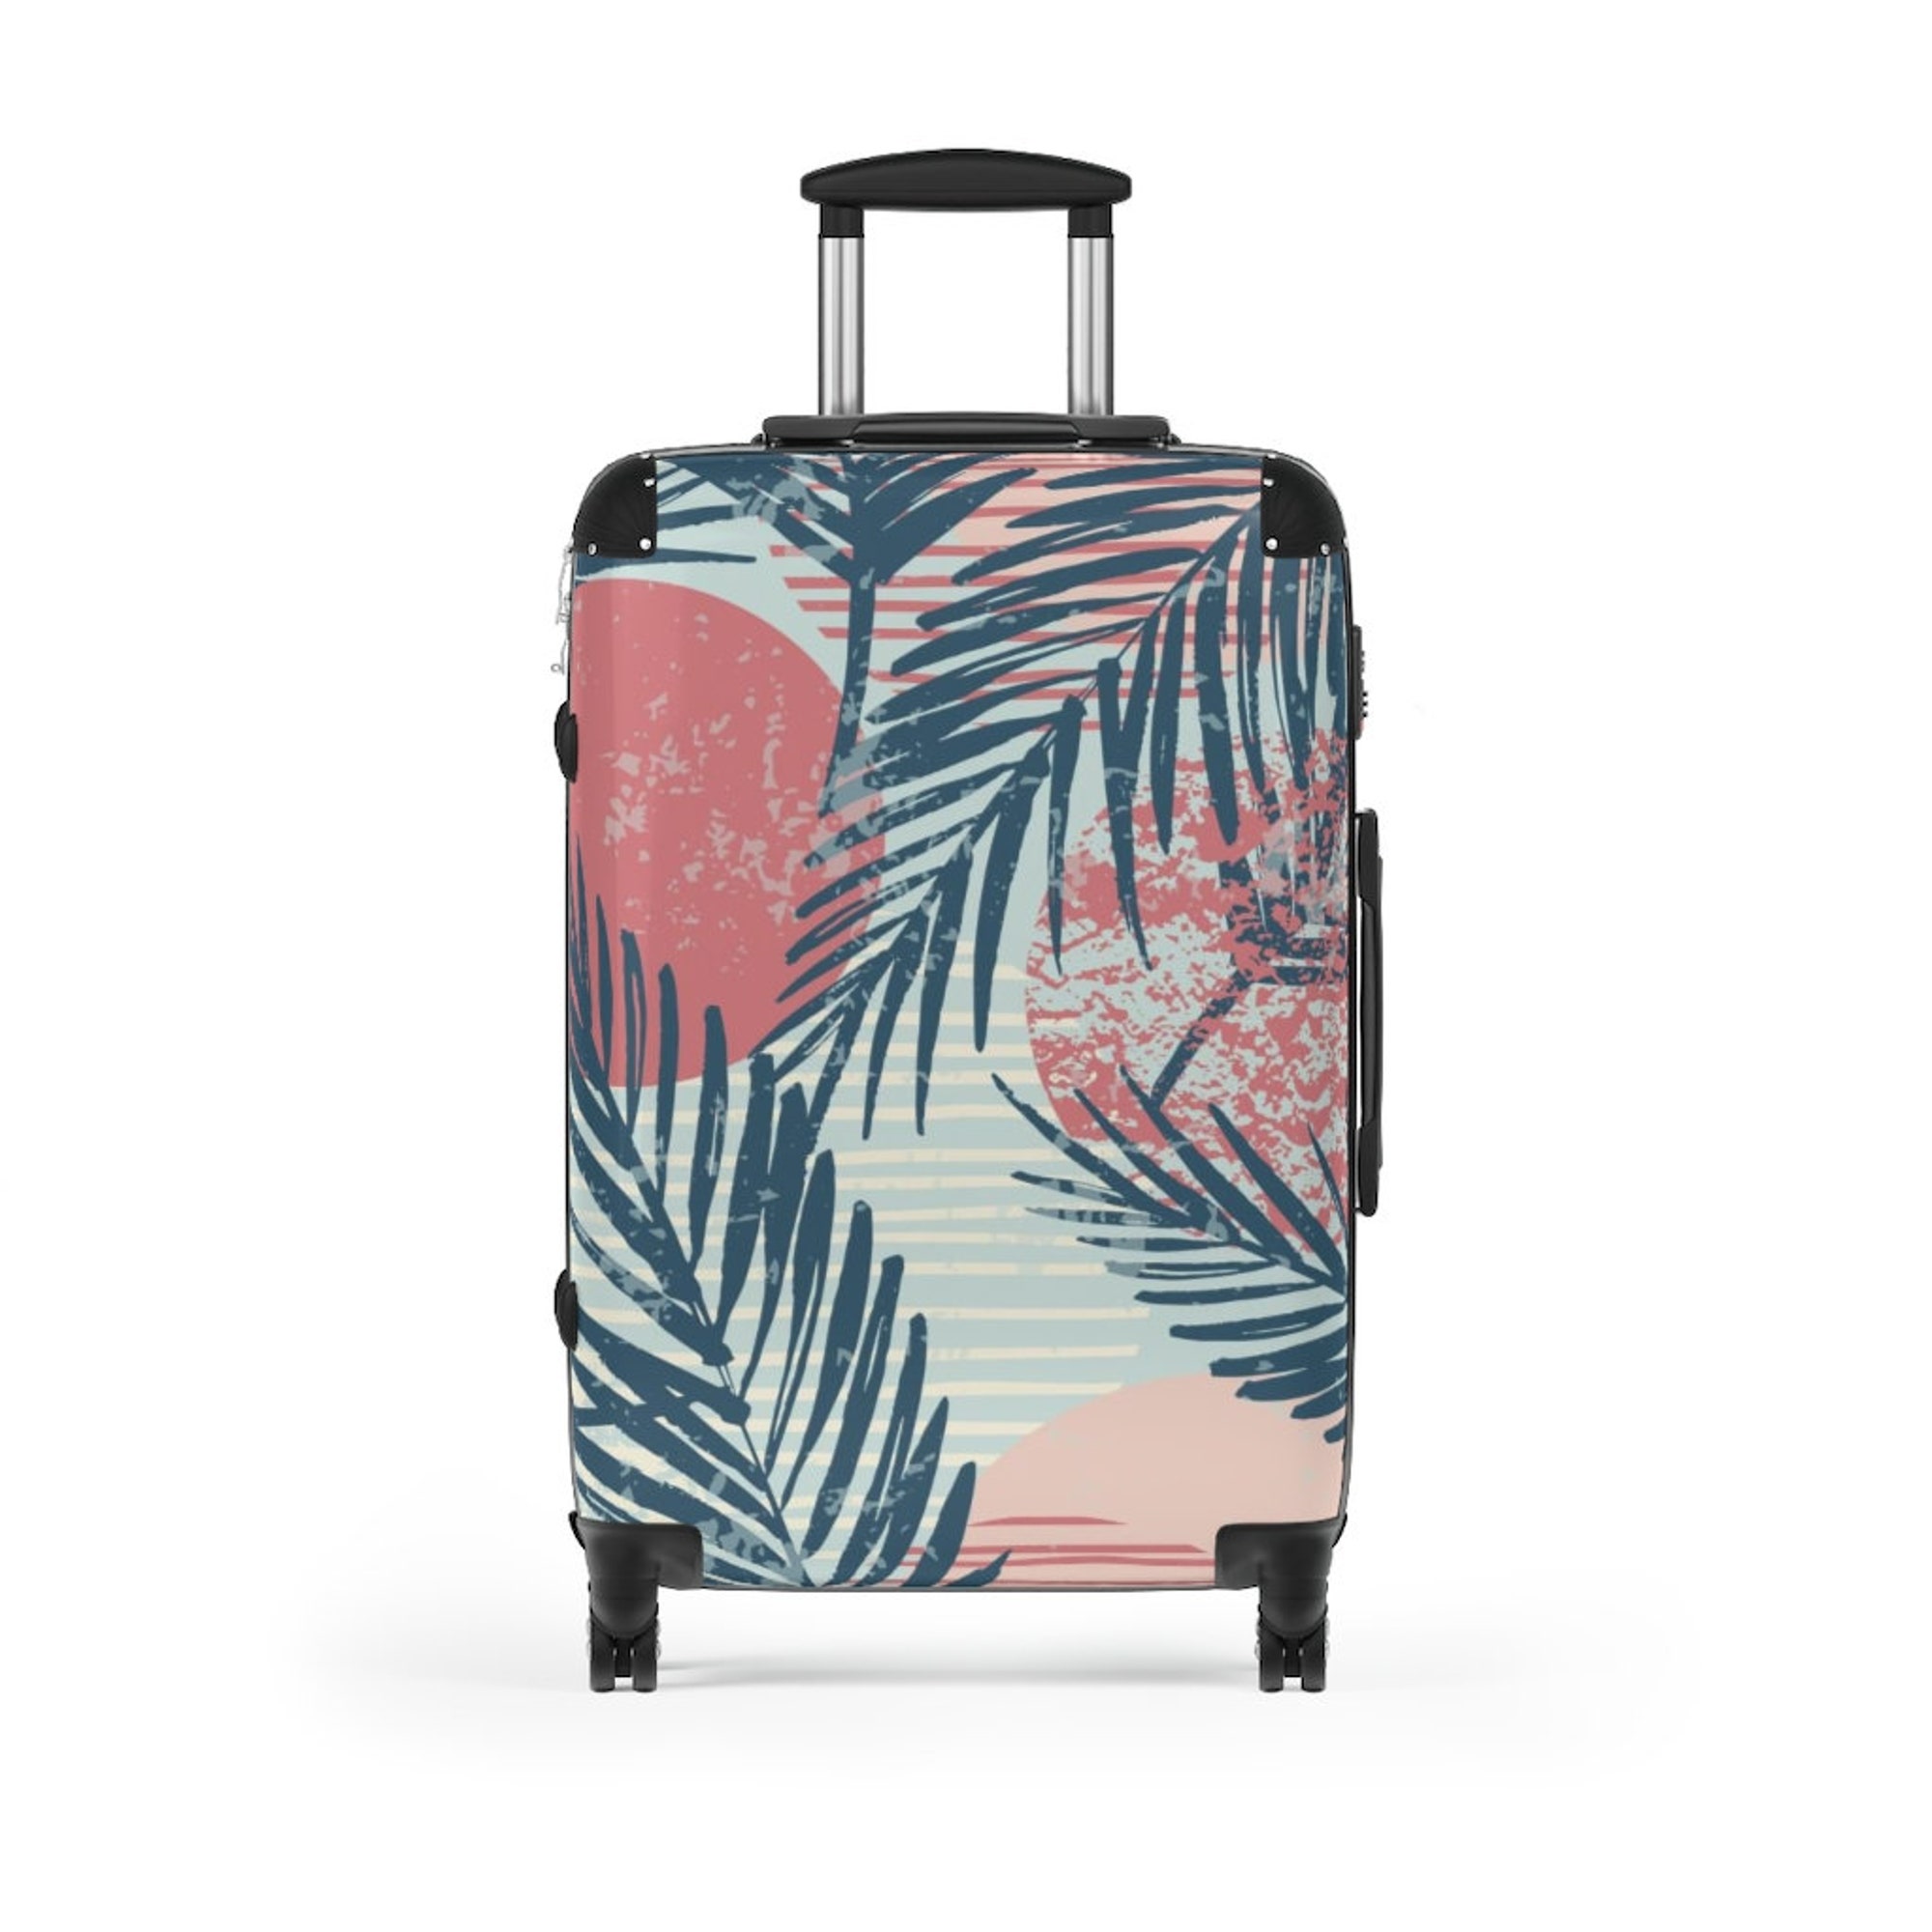 The Marina Suitcase